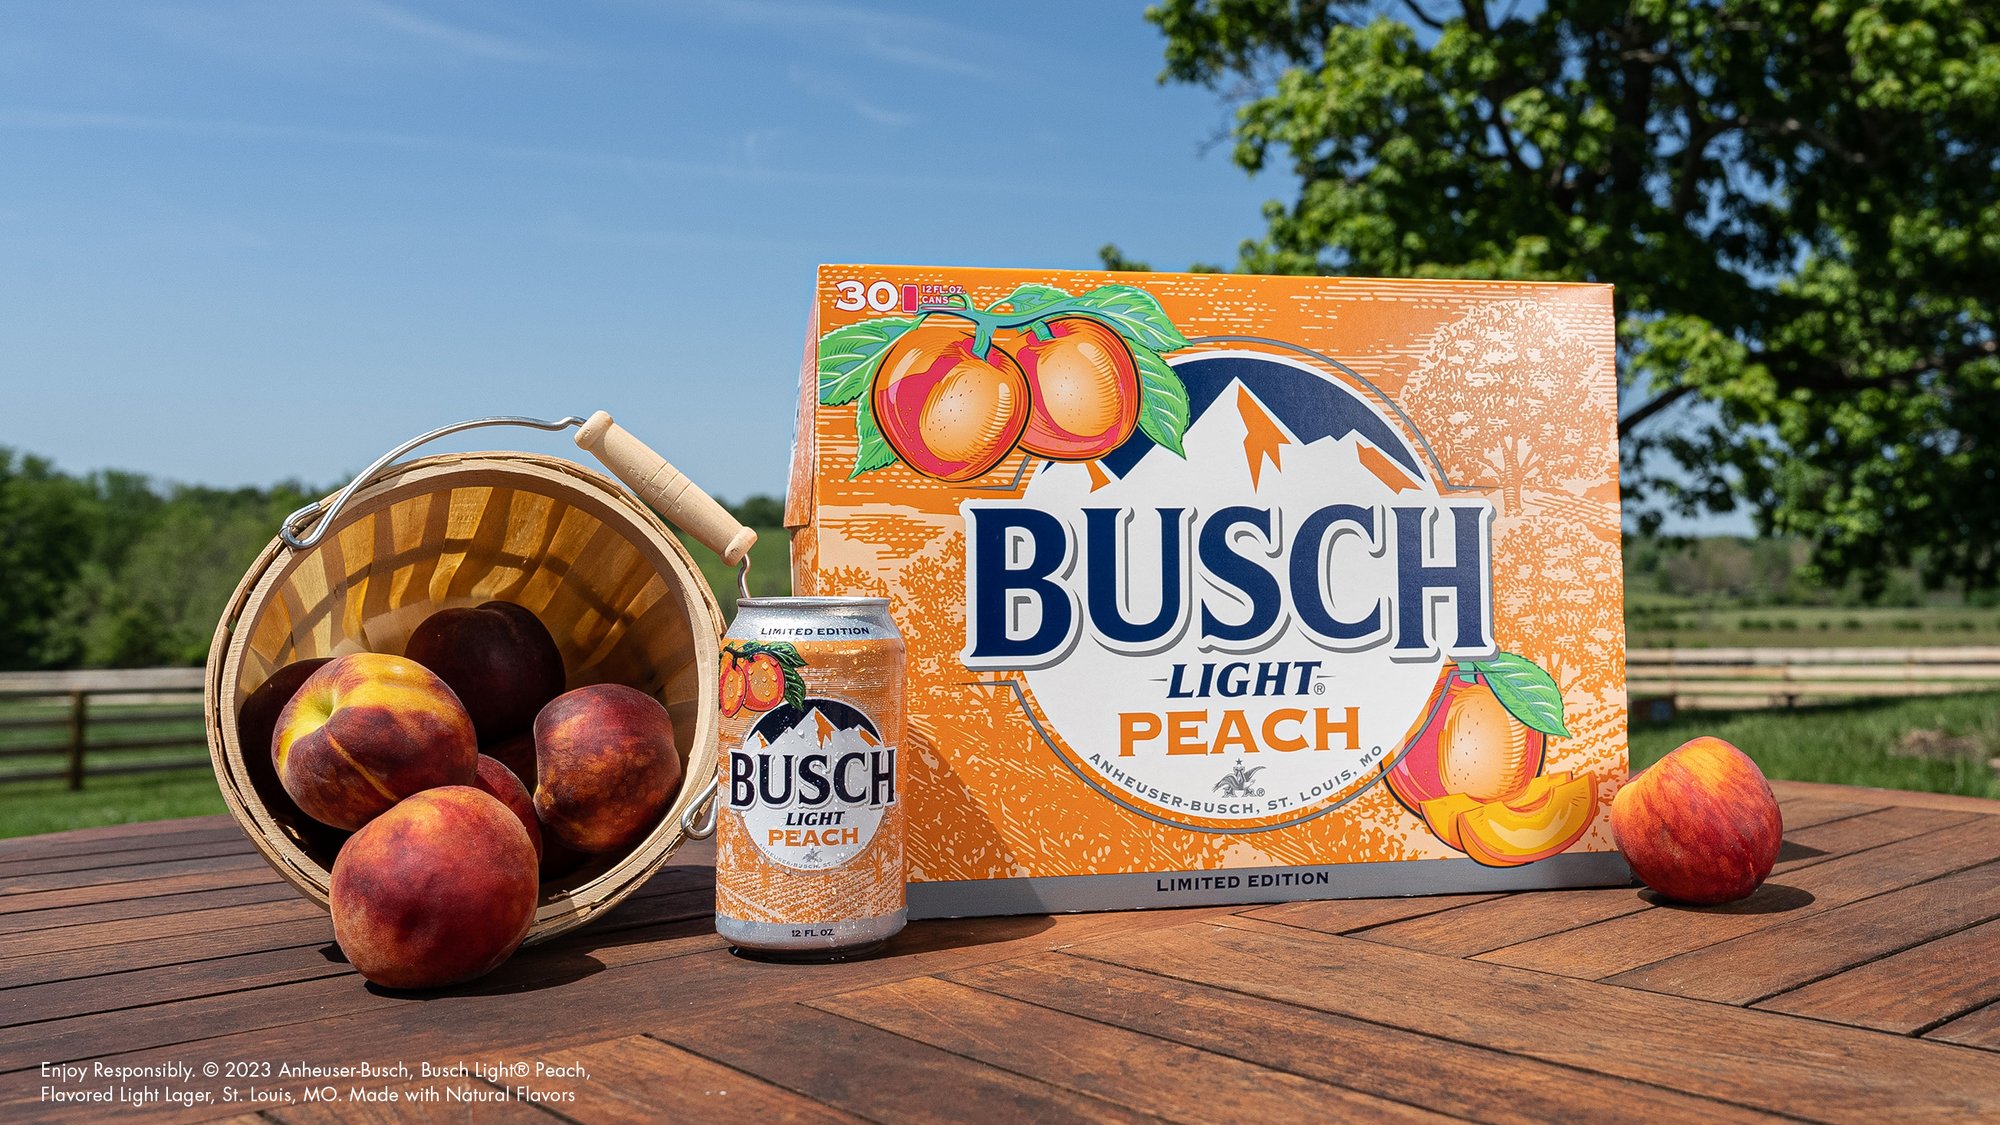 AnheuserBusch releasing Busch Light Peach today in 37 states